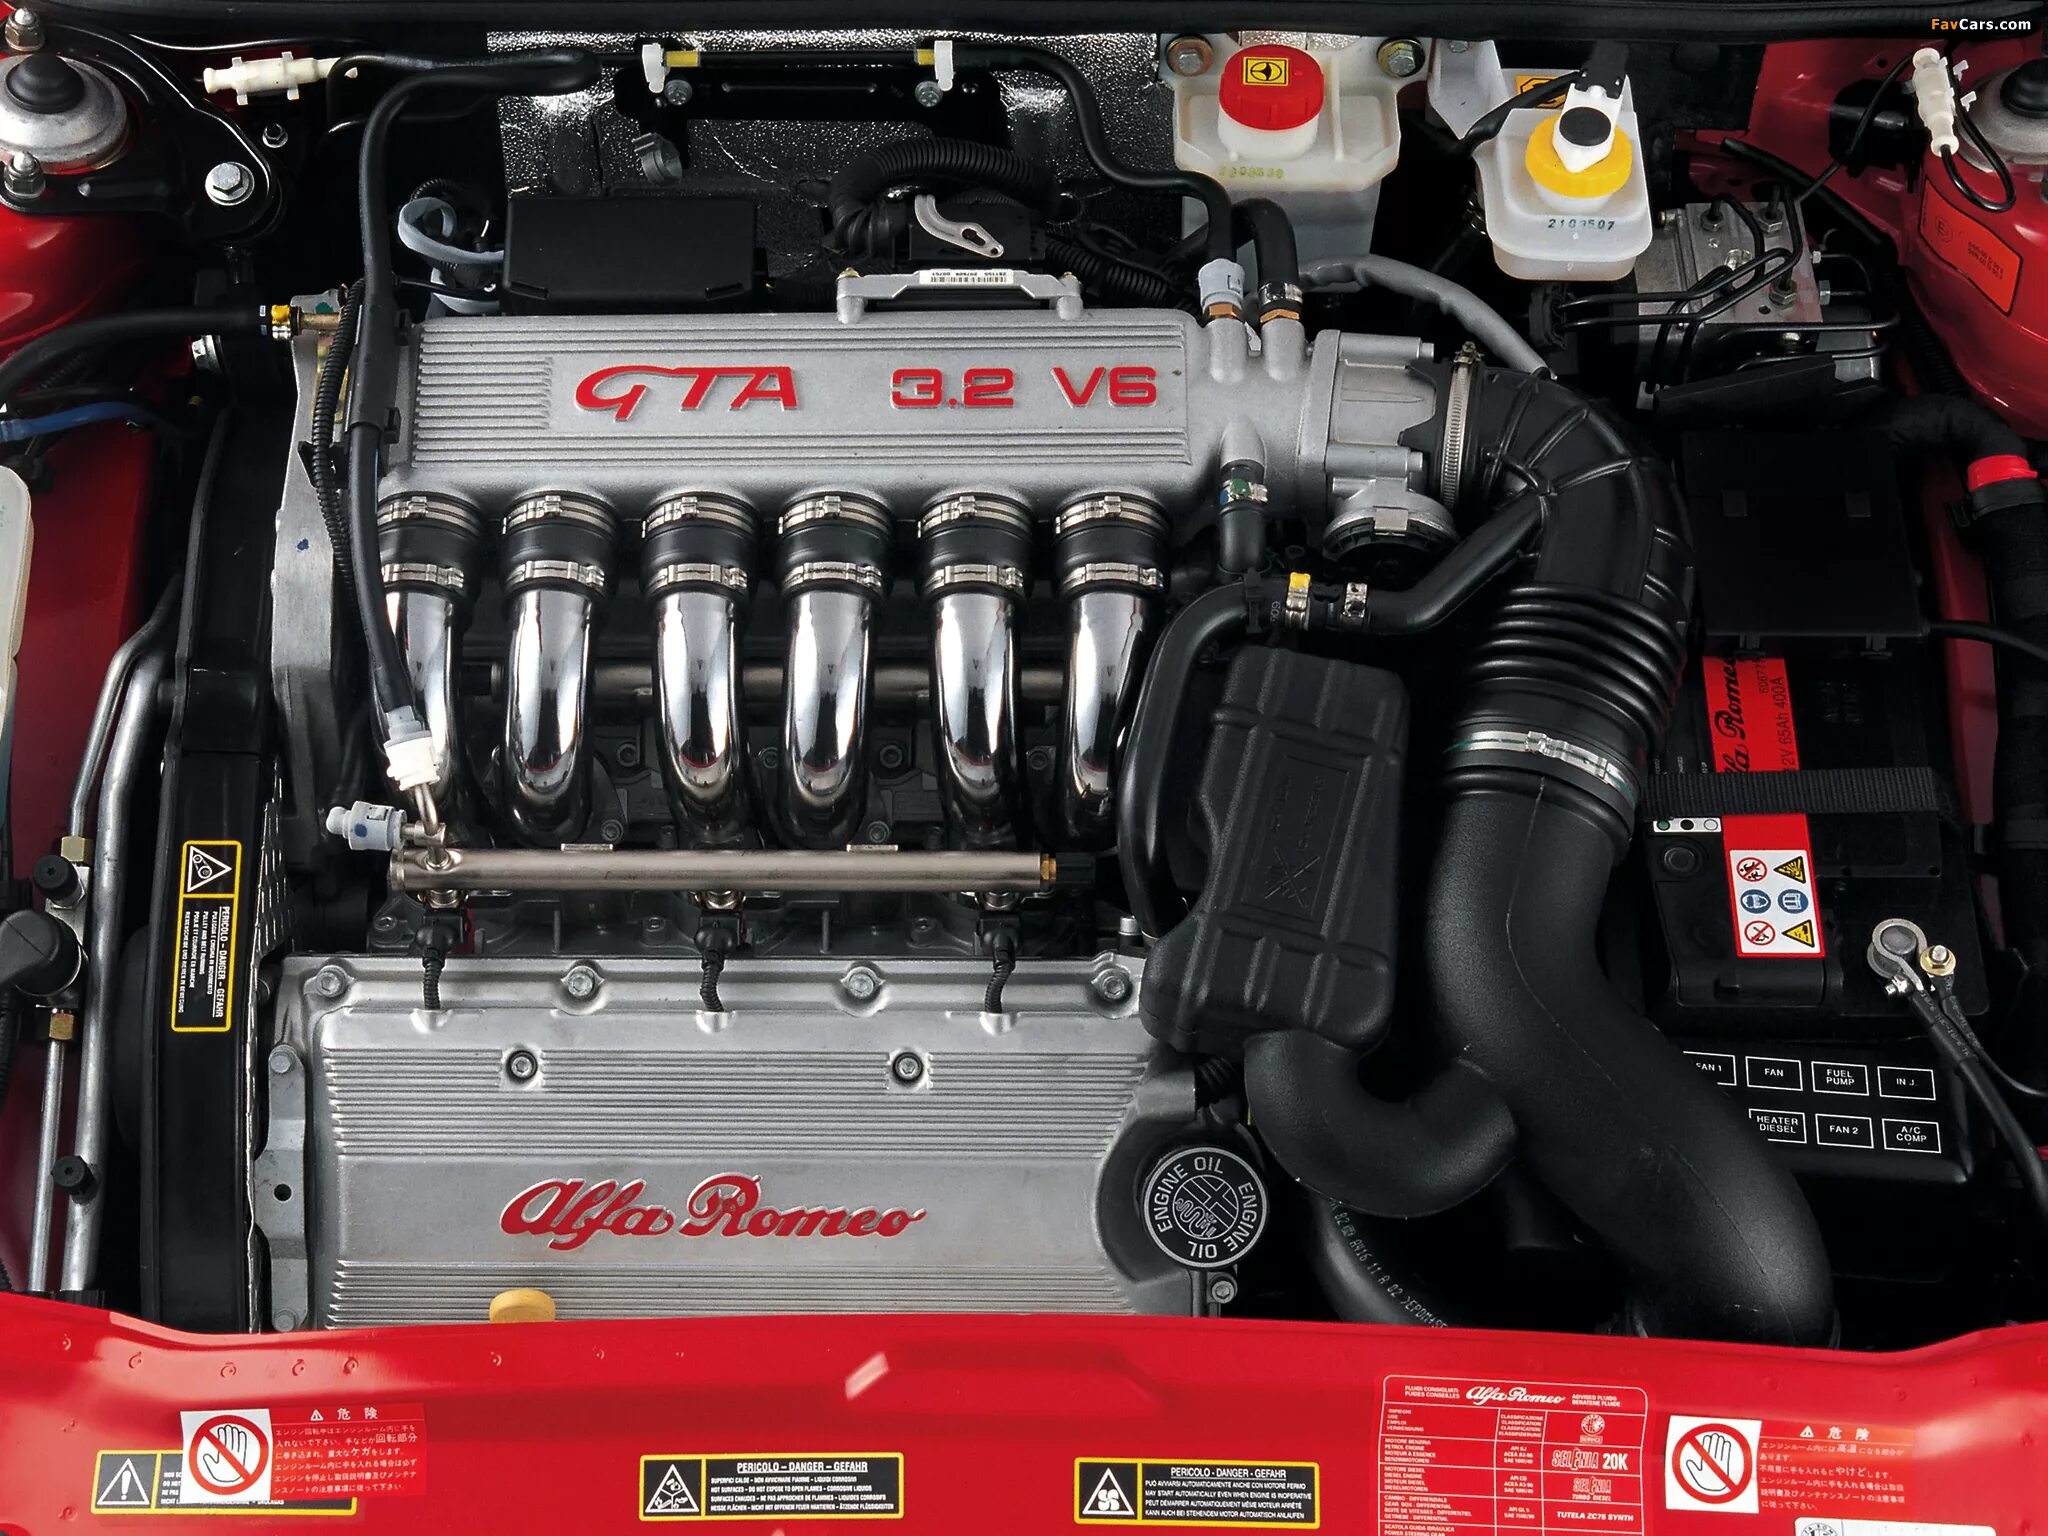 Alfa Romeo 156 v6. Альфа Ромео 156 GTA. Альфа Ромео 156 ГТА. Мотор Альфа Ромео 2.2.